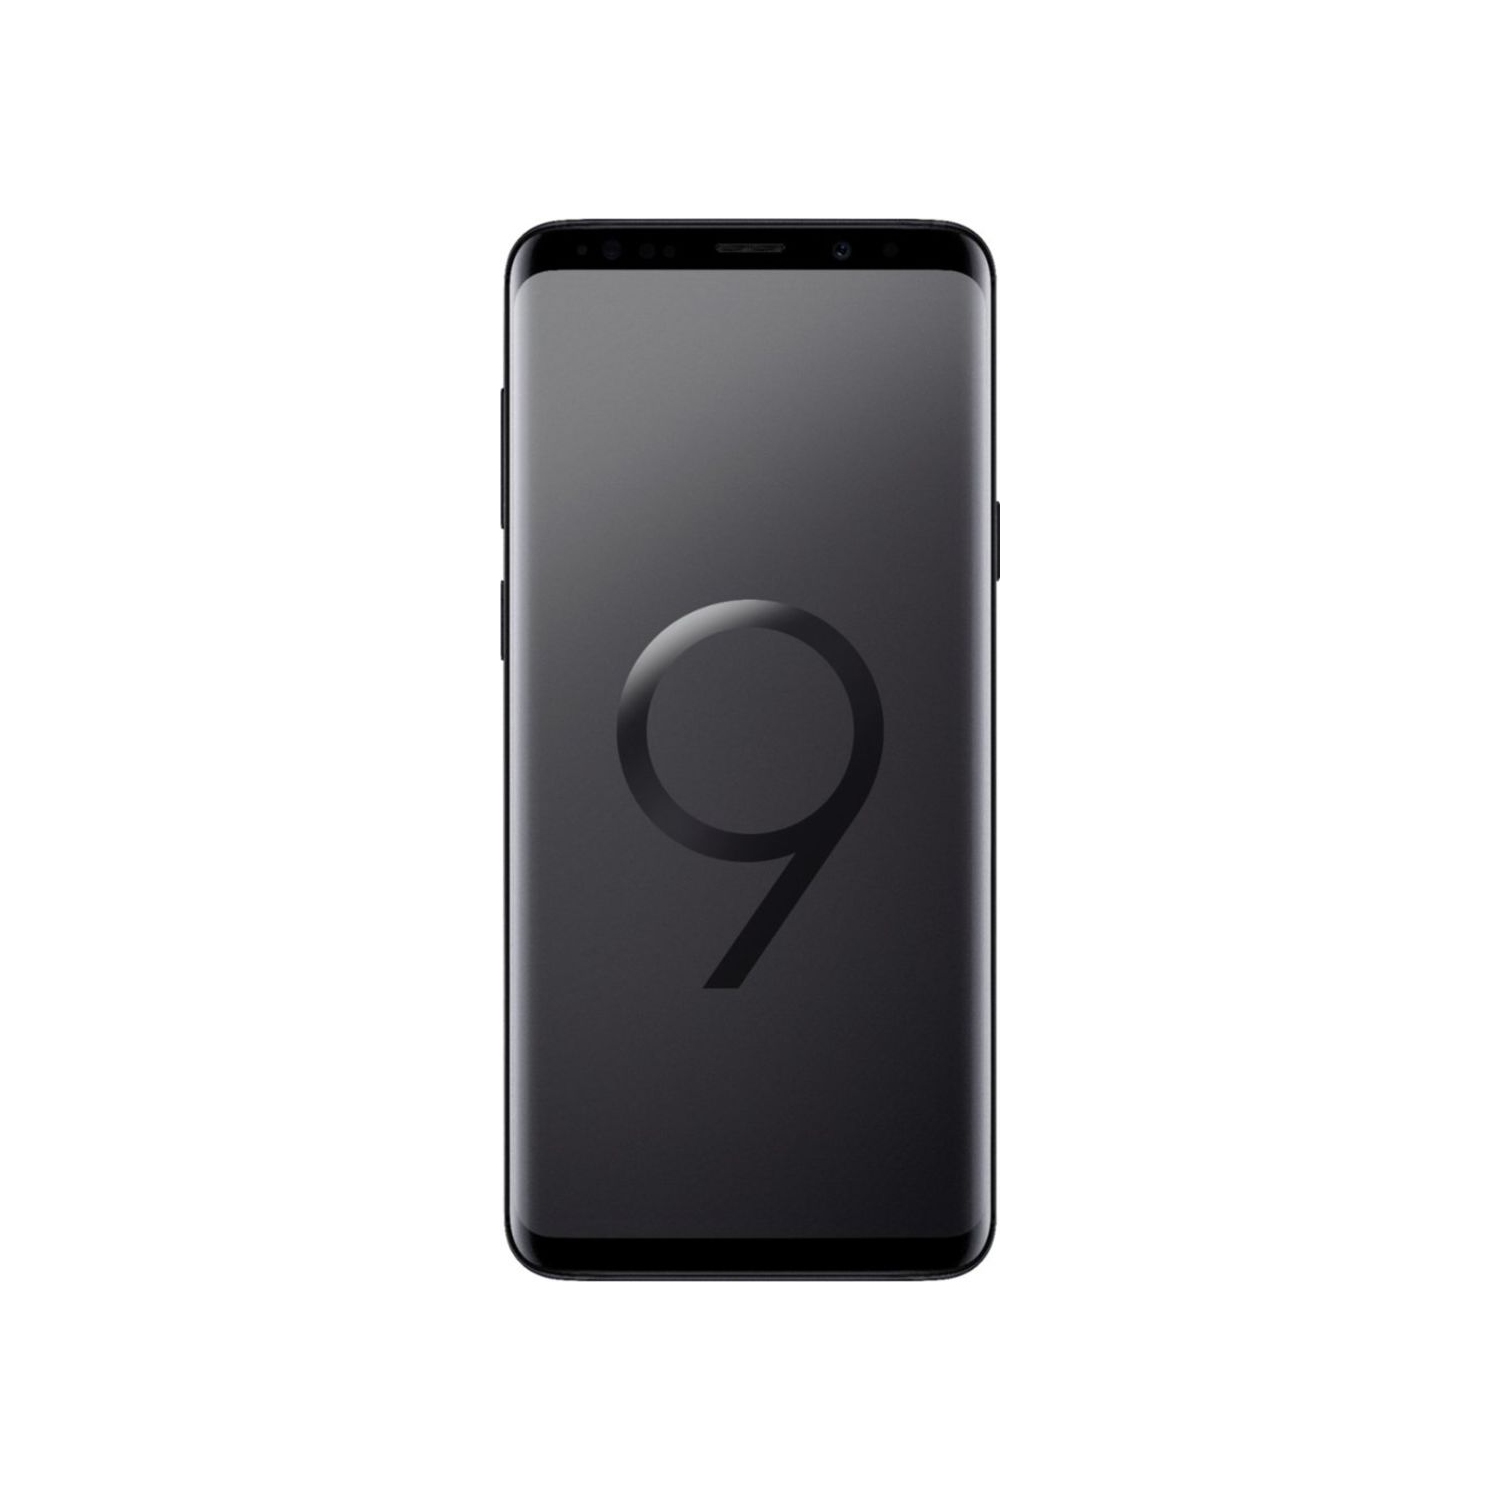 Samsung Galaxy S9+ 64GB Smartphone - Midnight Black - Unlocked - Open Box